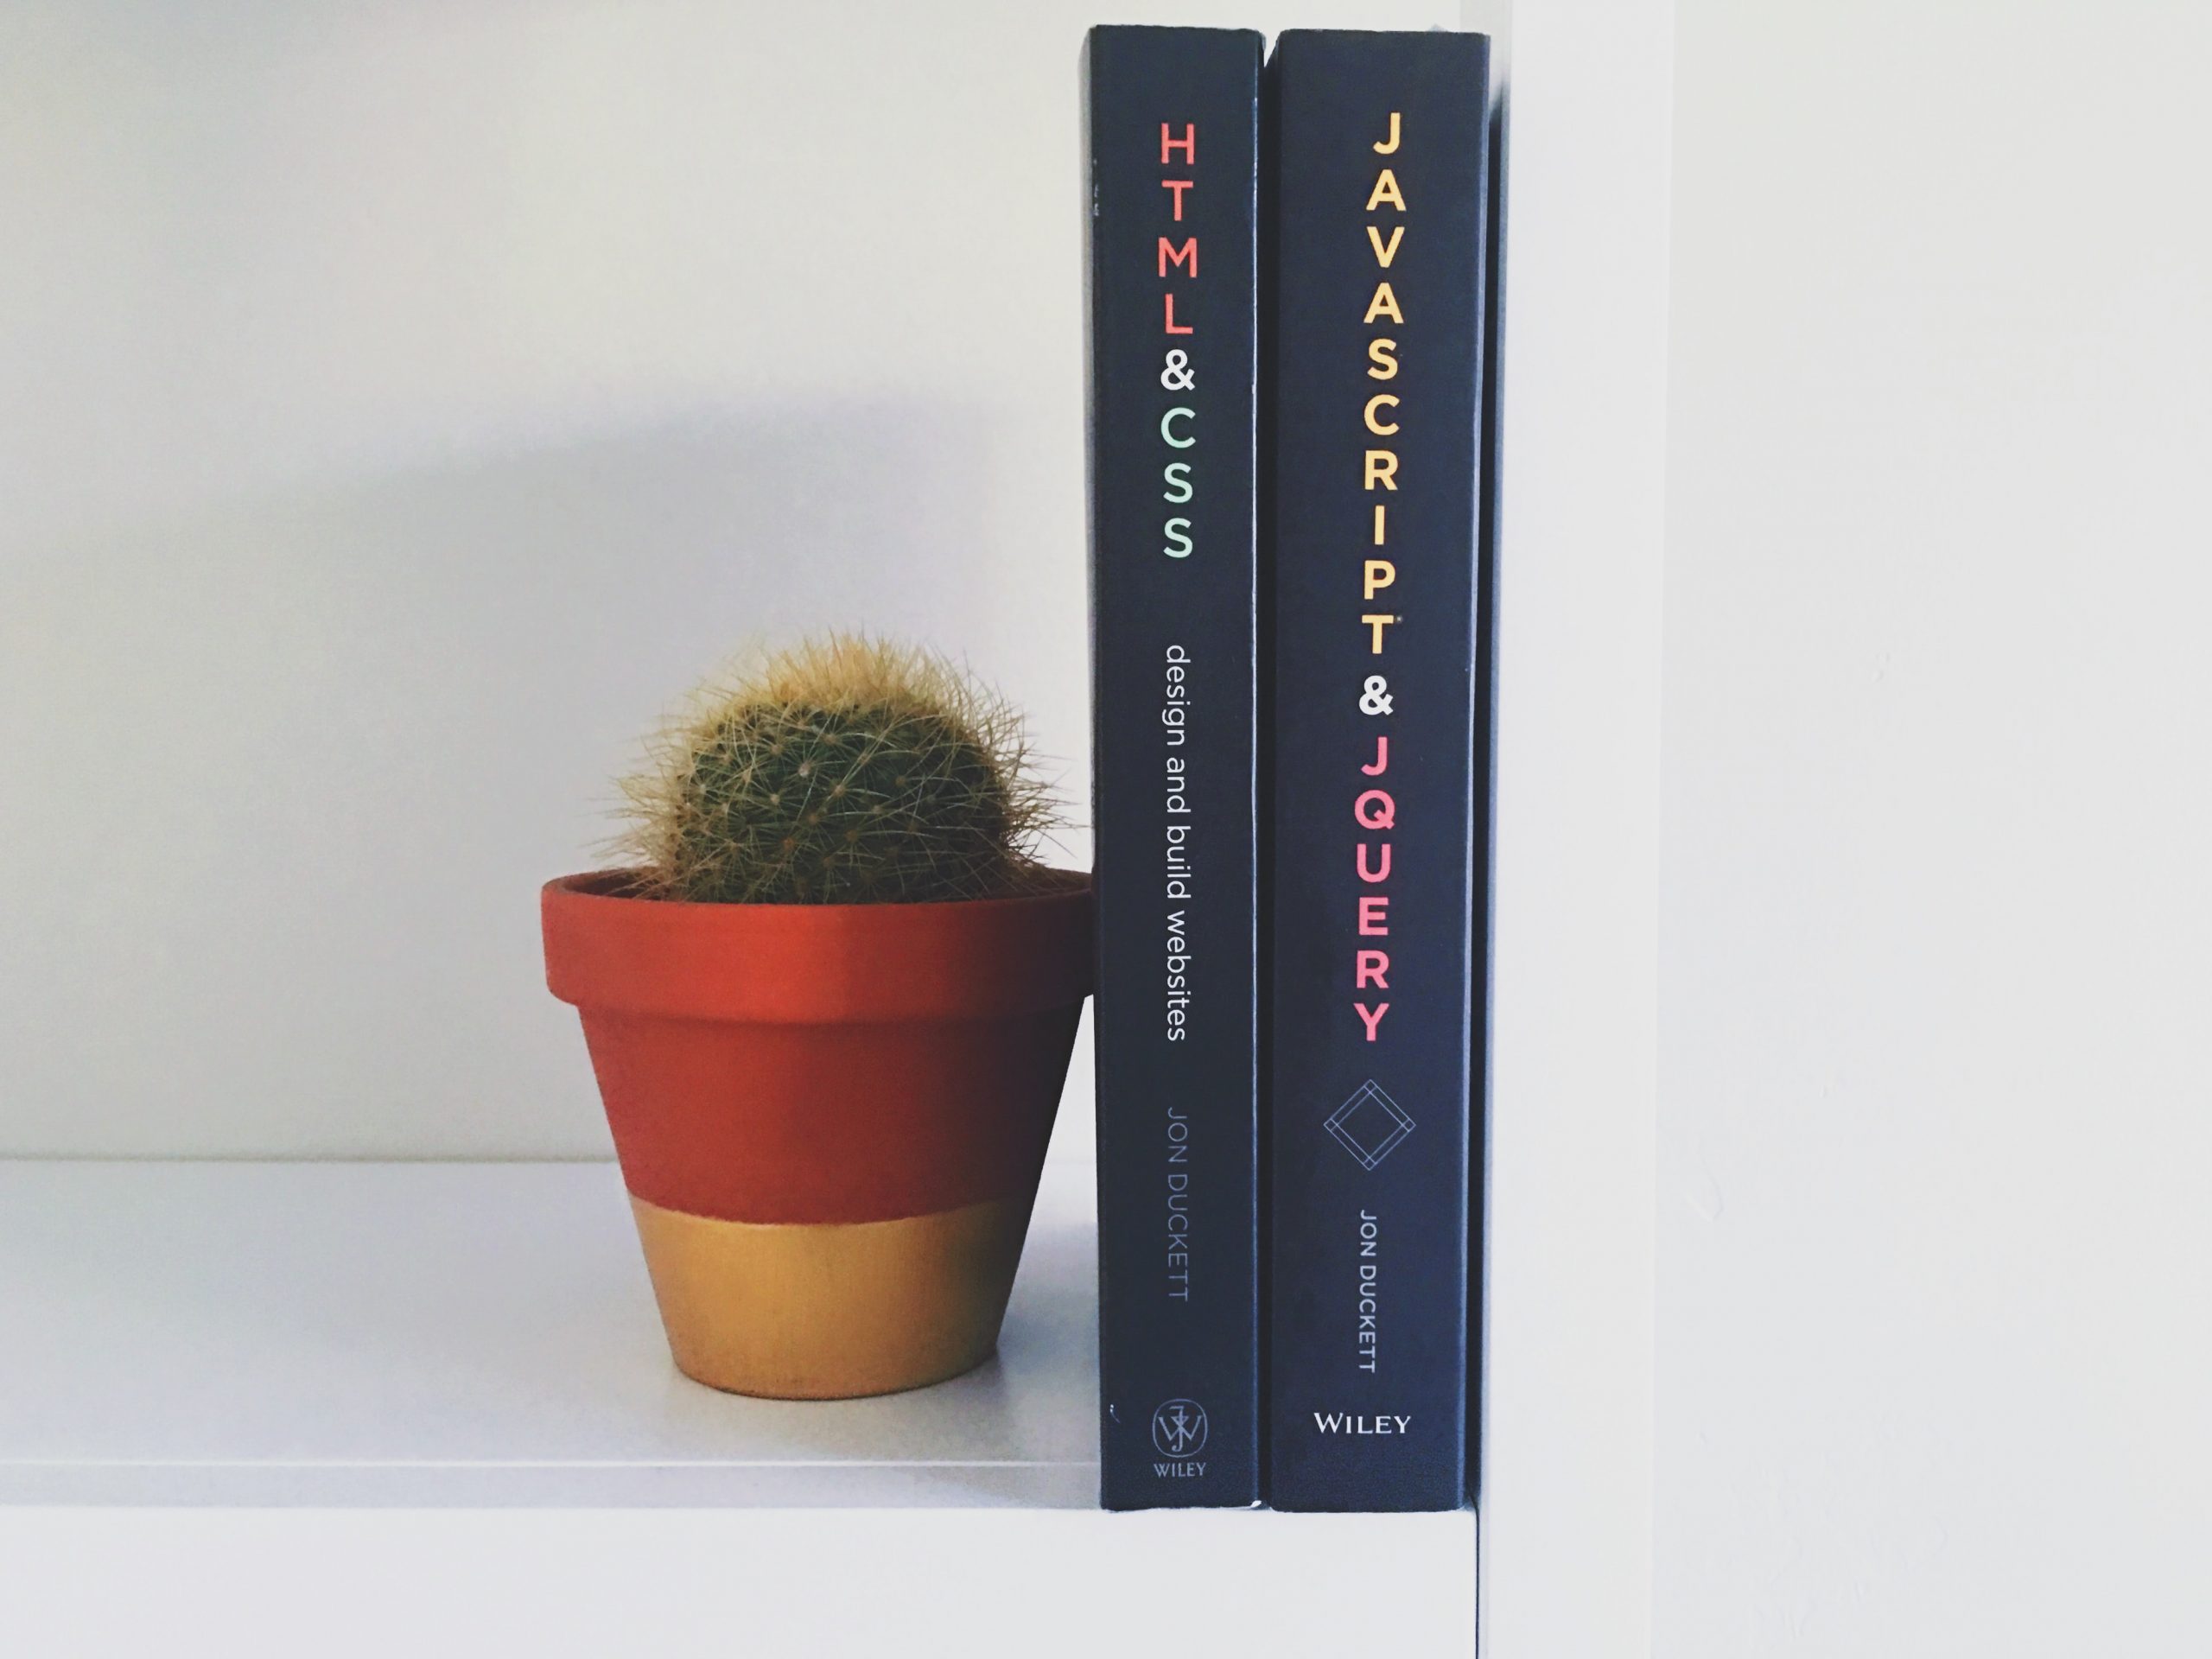 Books beside a cactus pot